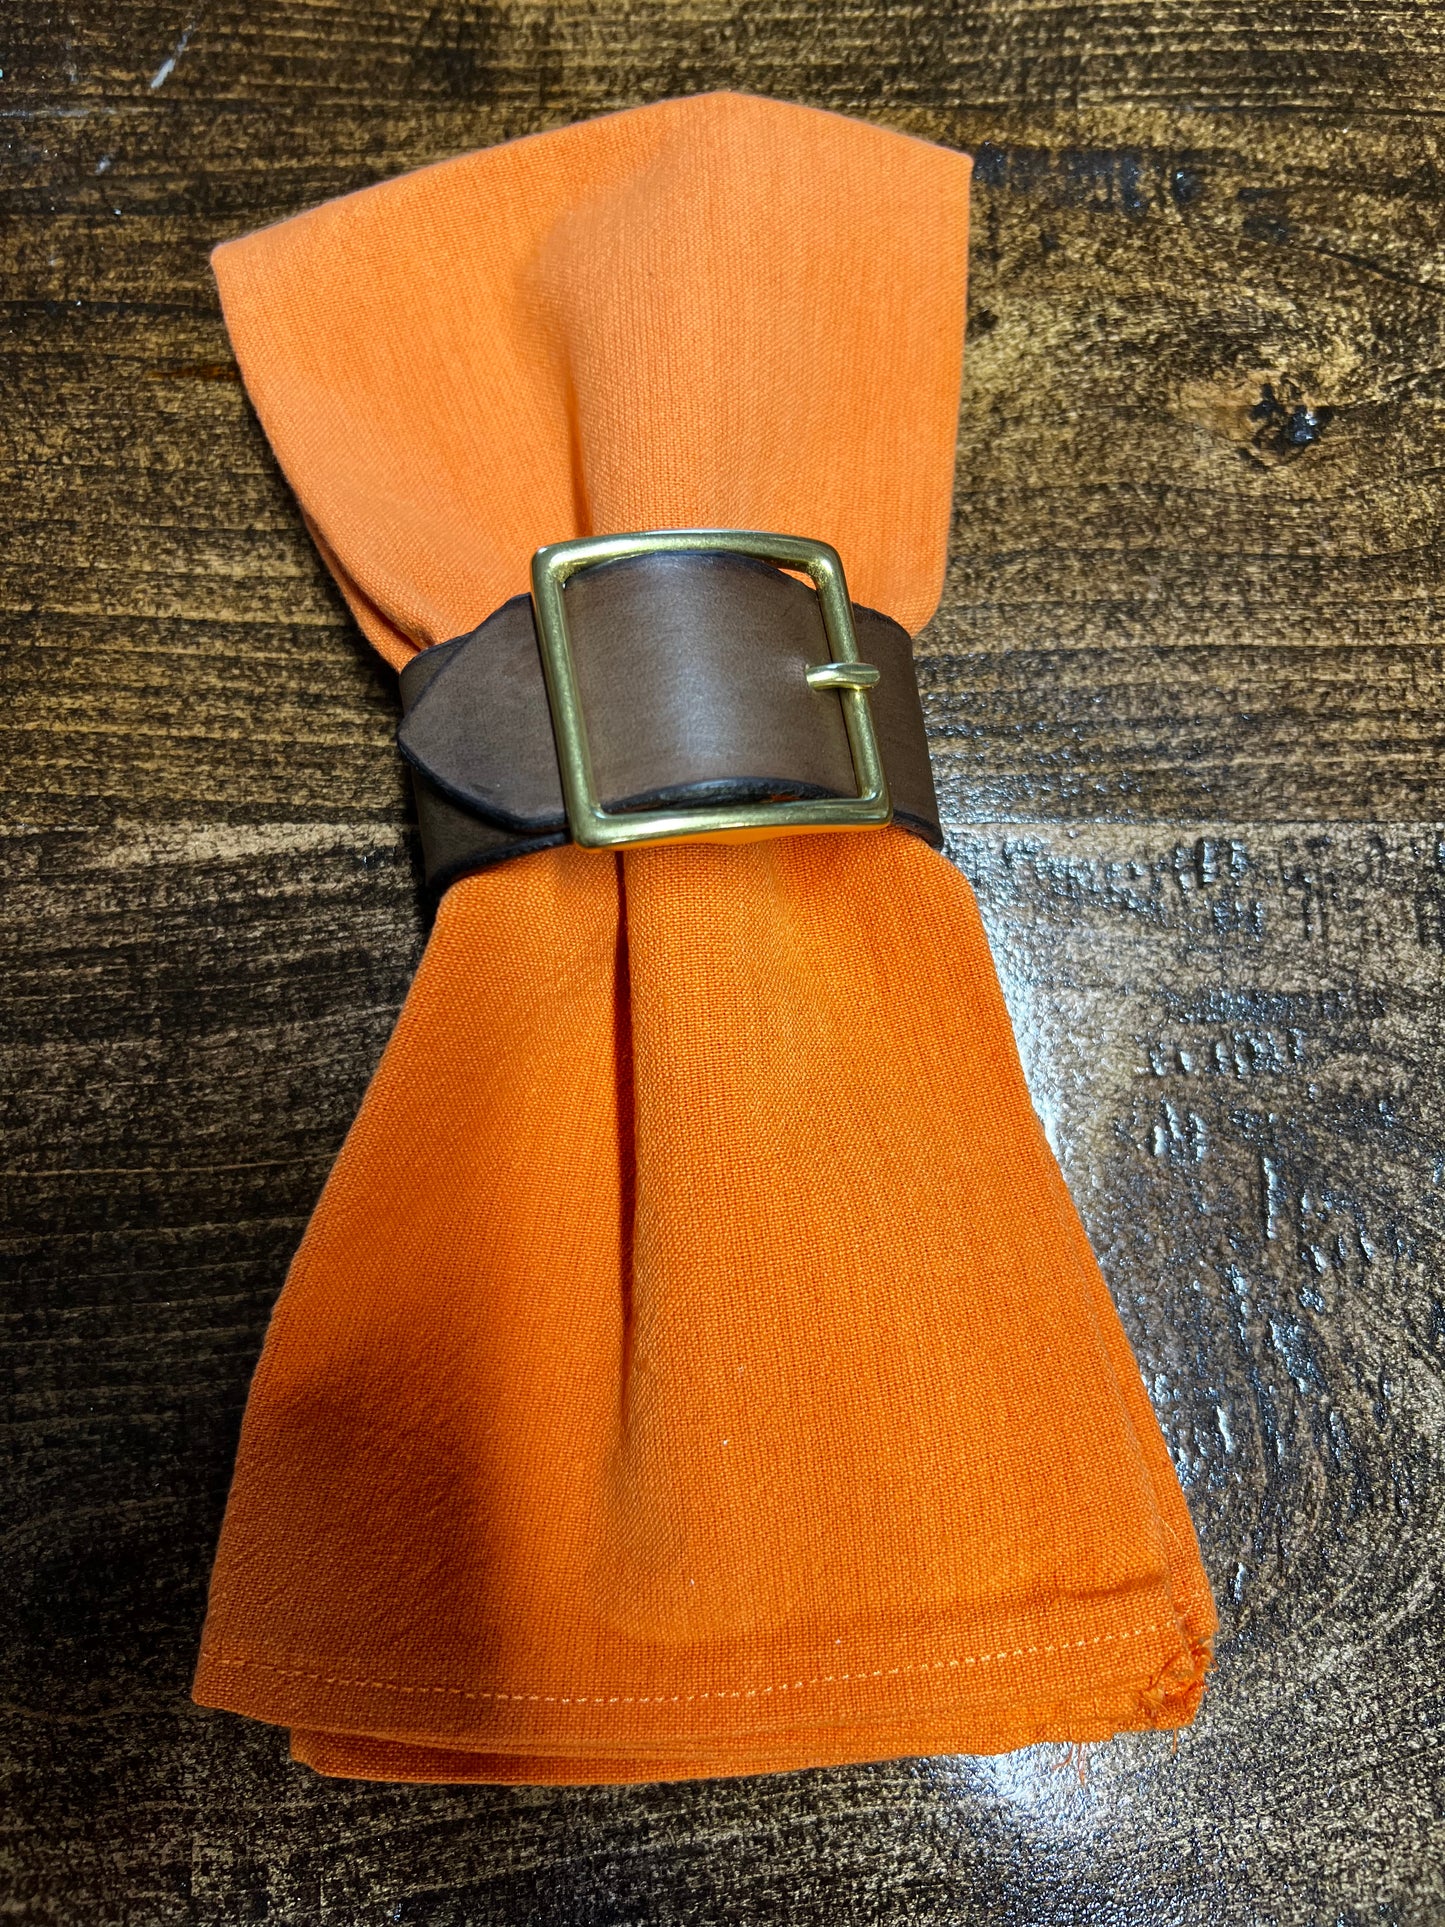 Napkins with Leather Napkin Belt Holder